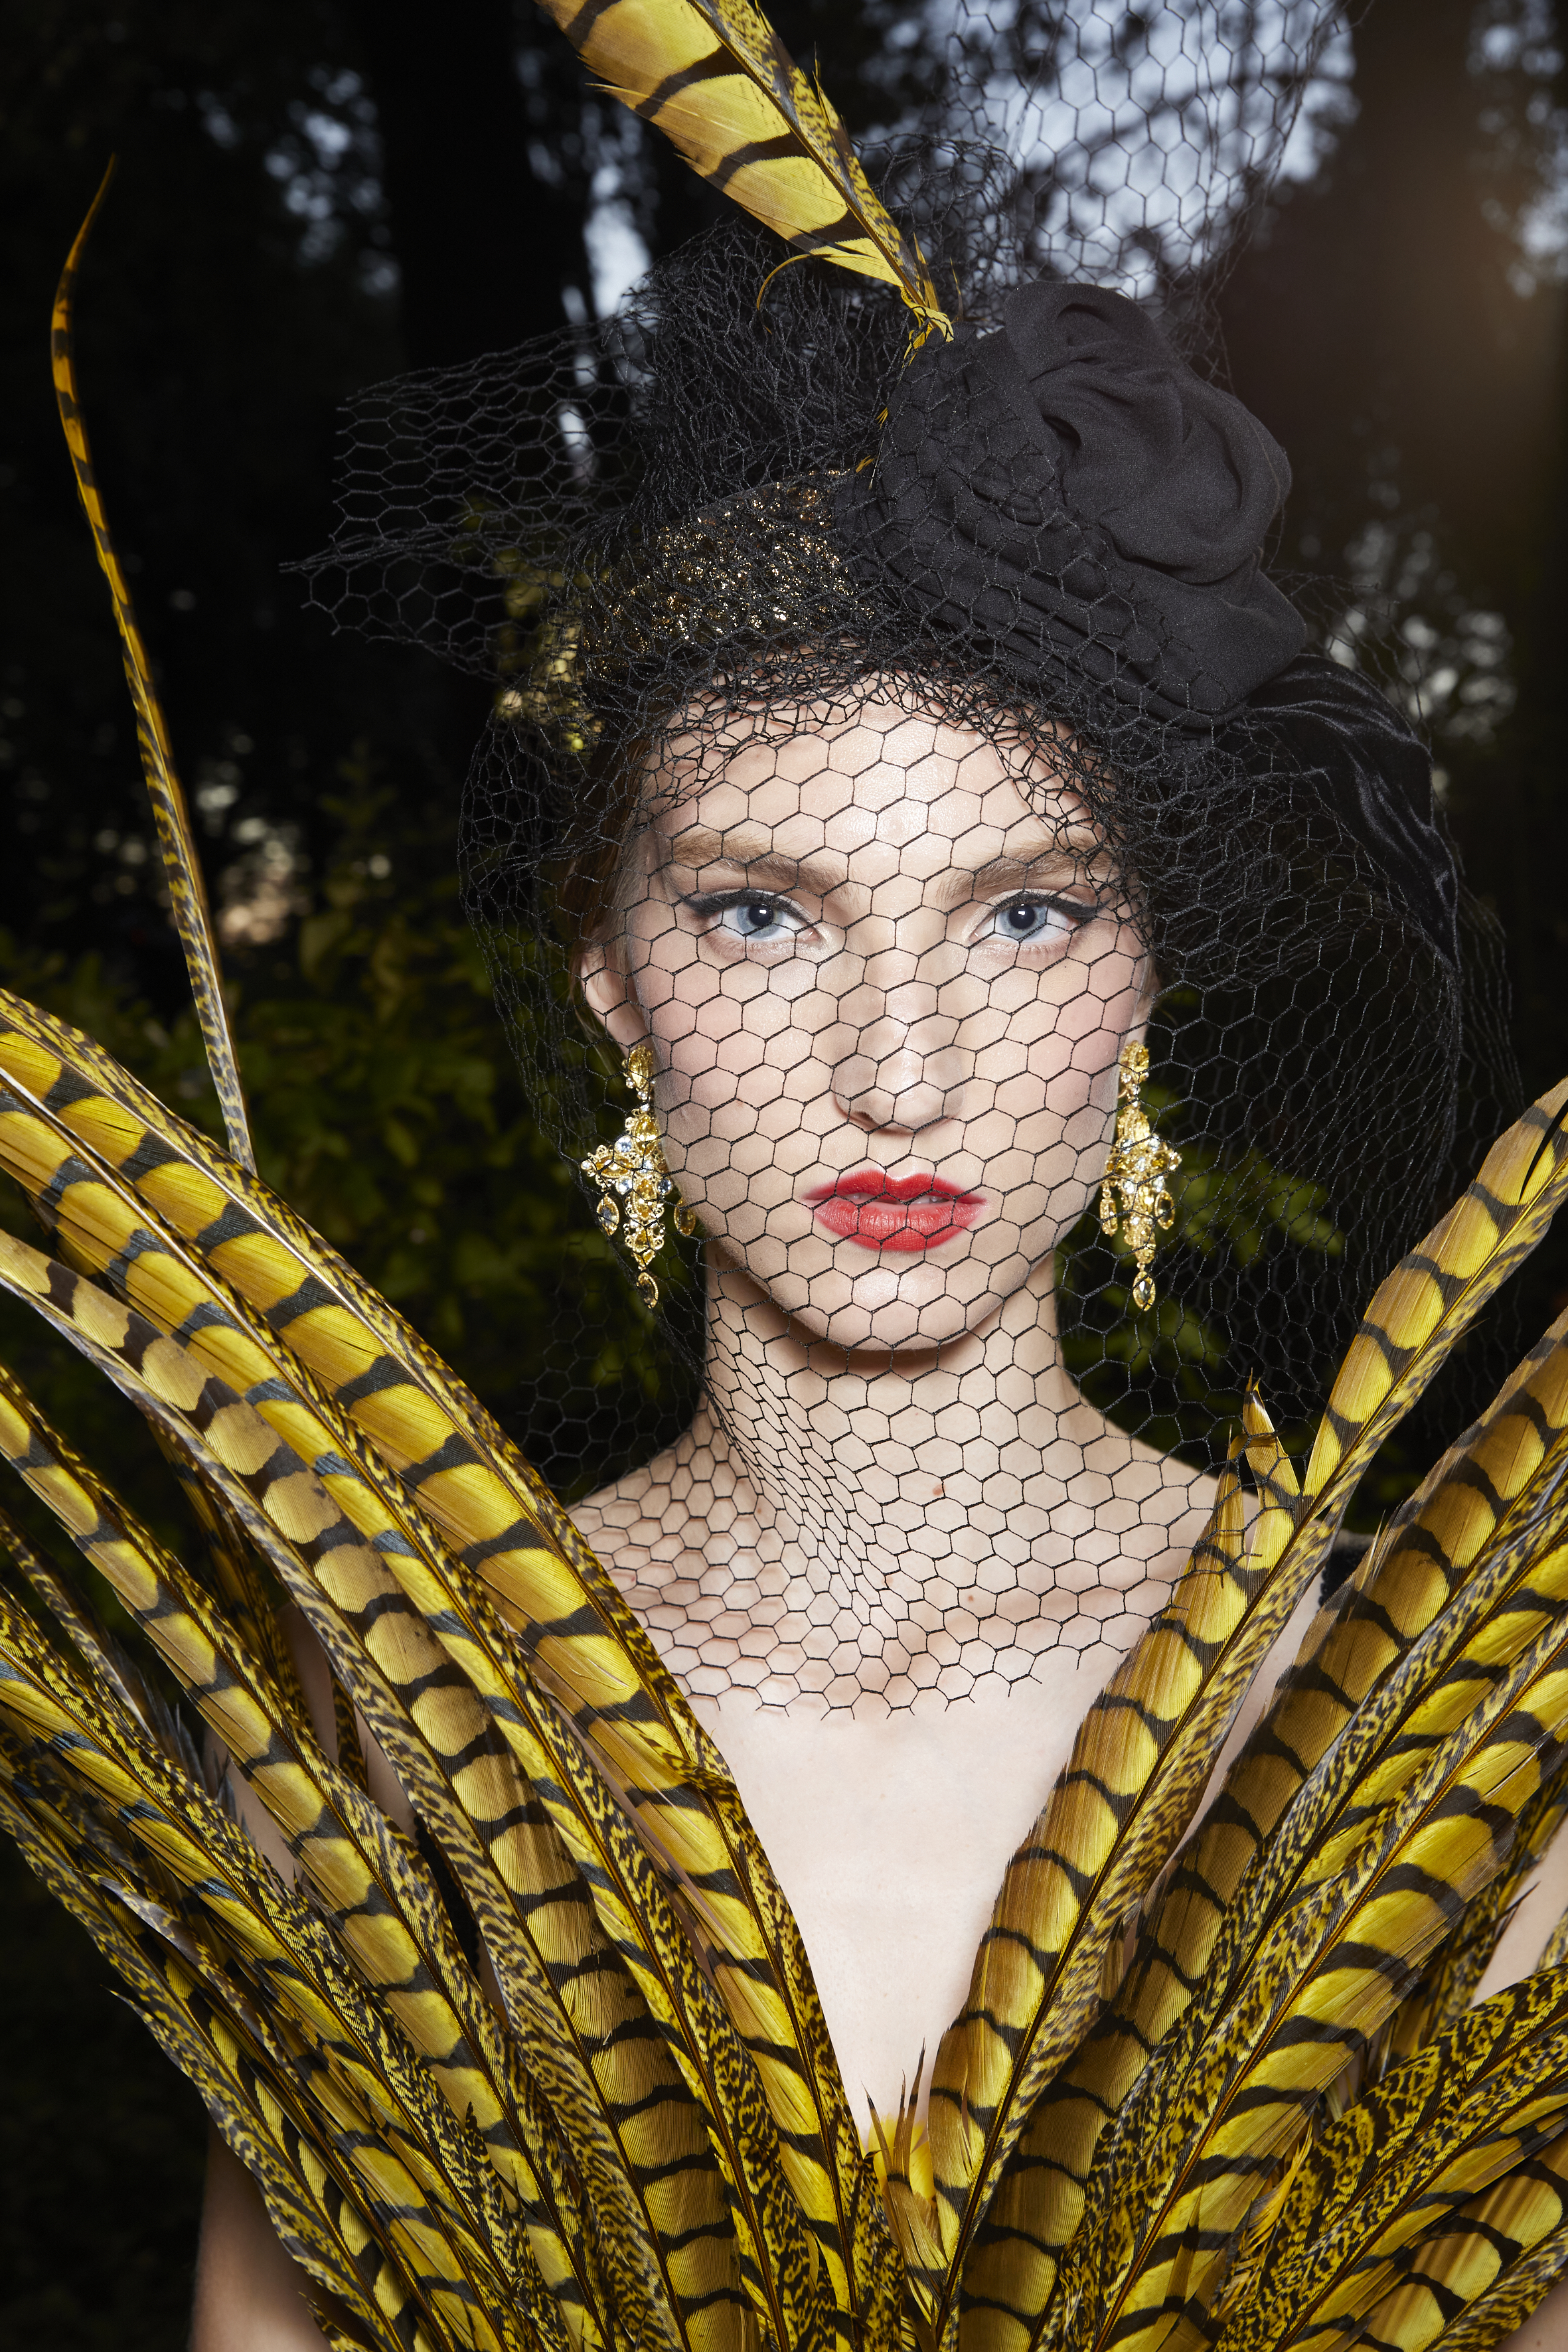  Dolce&Gabbana 杜嘉班纳 2021 高级定制系列发布 – 威尼斯